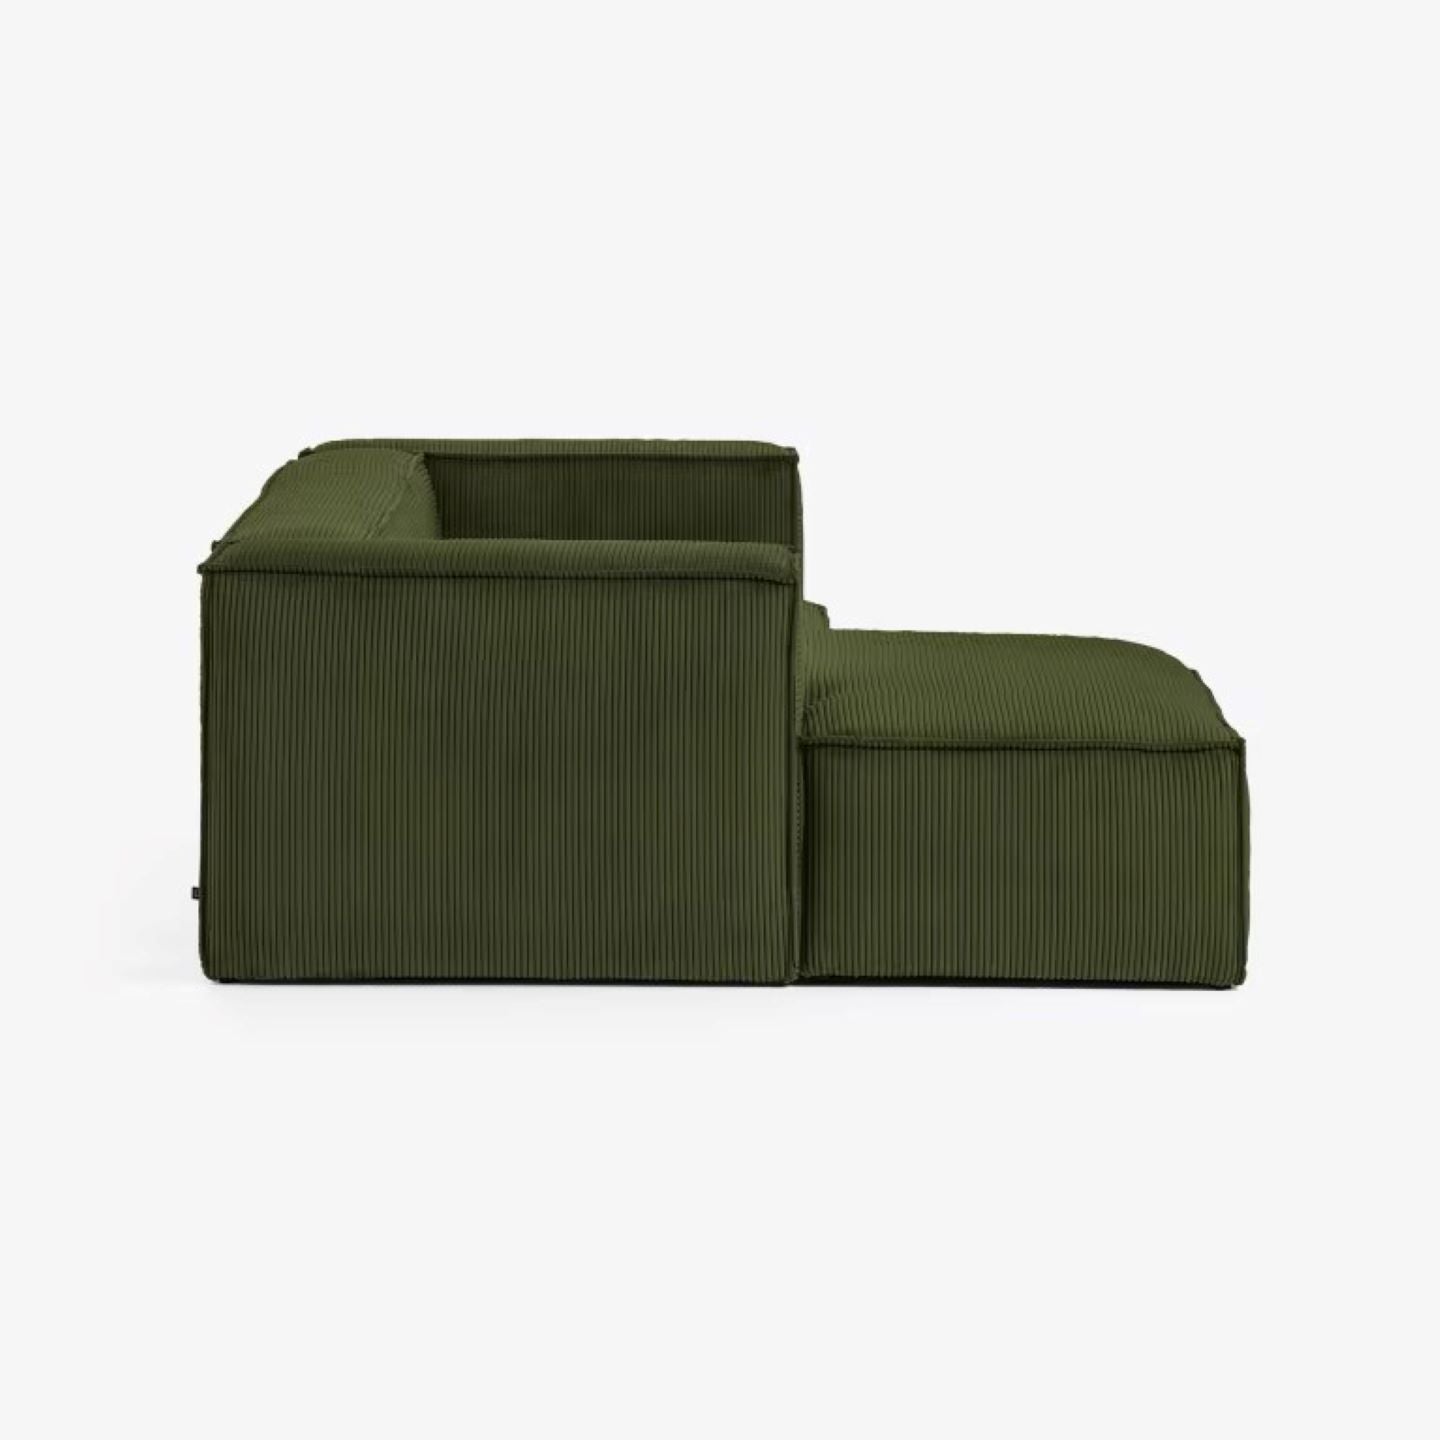 Kave Home Blok 2-Sitzer Sofa mit Chaiselongue links Kord - SKU #S575LN19